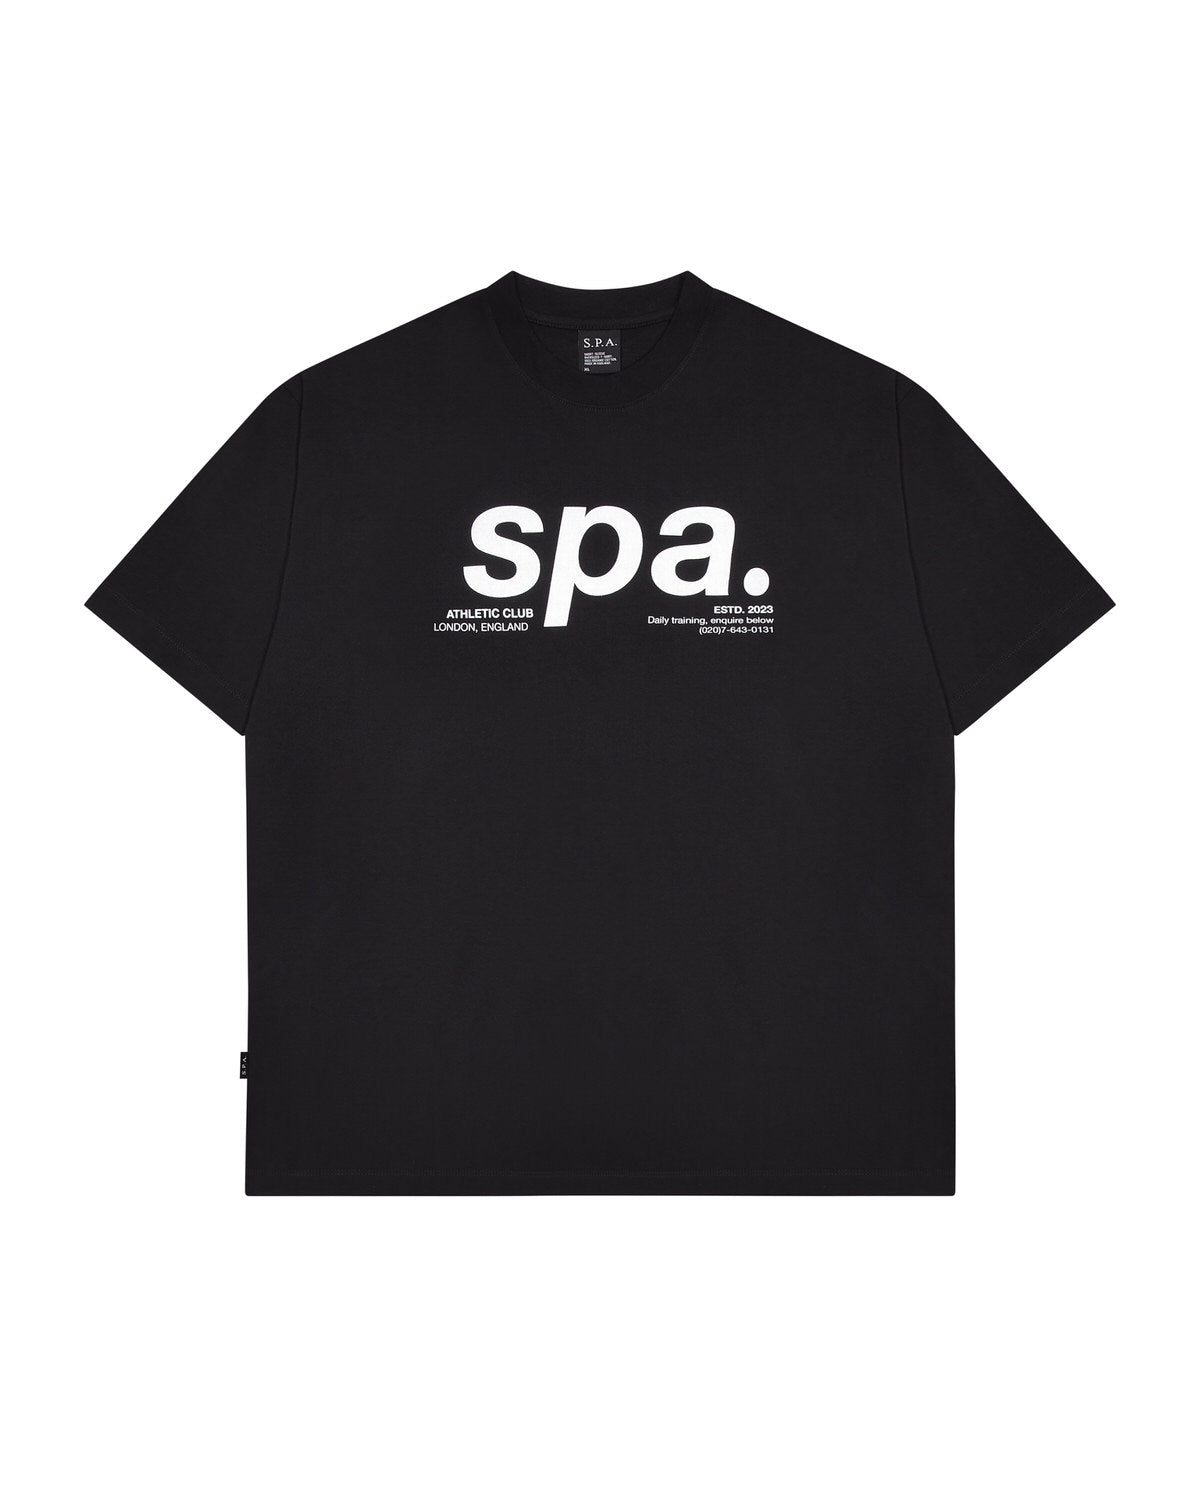 S.P.A. Athletic Club T-shirt - Black